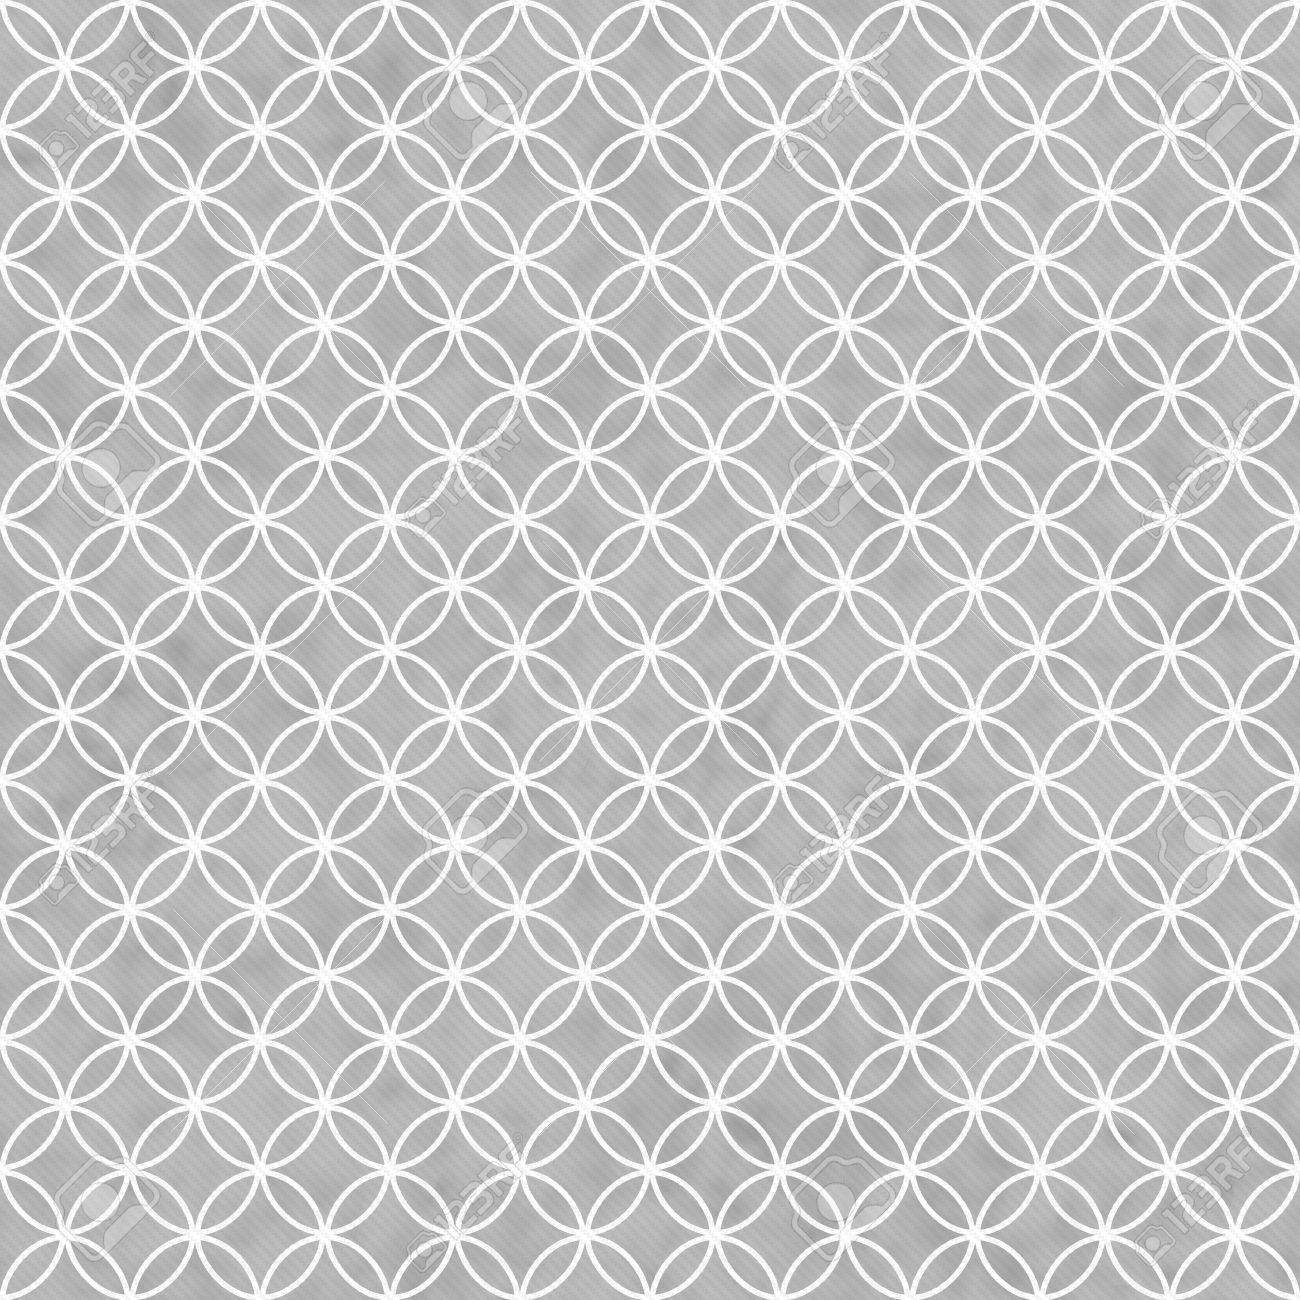 Gray And White Interlocking Circles Tiles Pattern Repeat